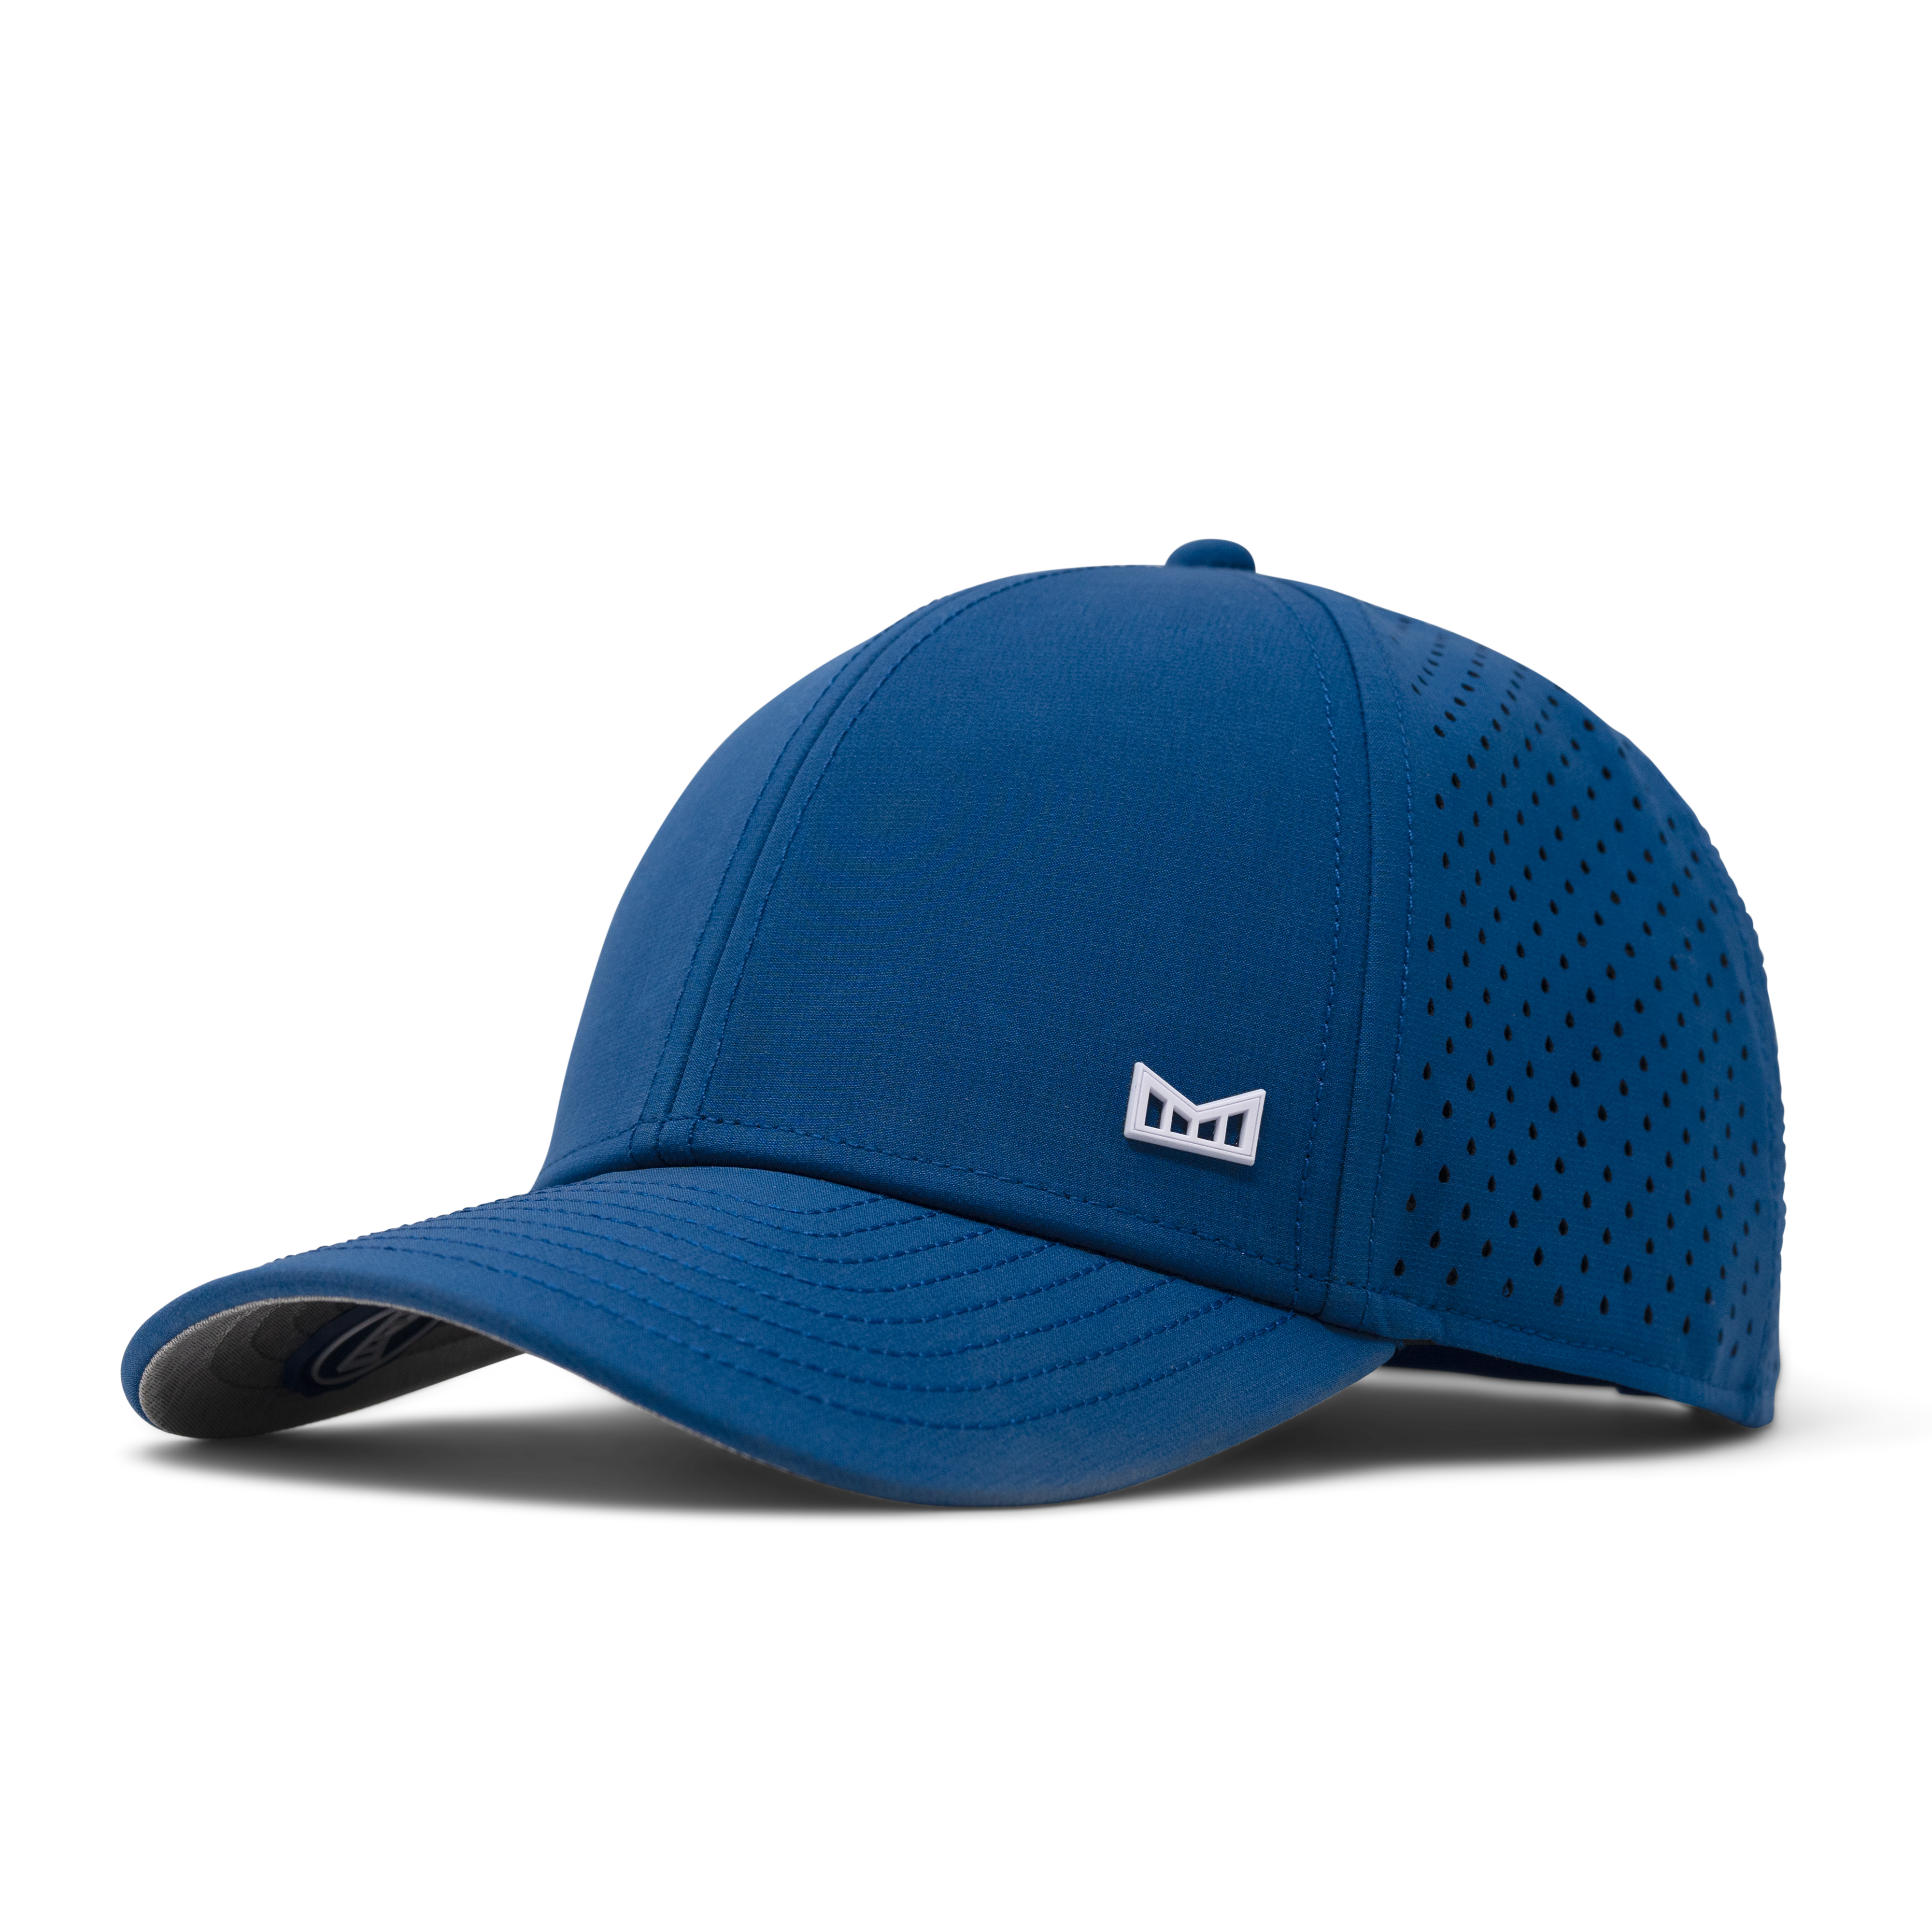 Gap Mens Baseball Hat One Size Gray Hook & Loop Adjustable Graphic Camping  Cap